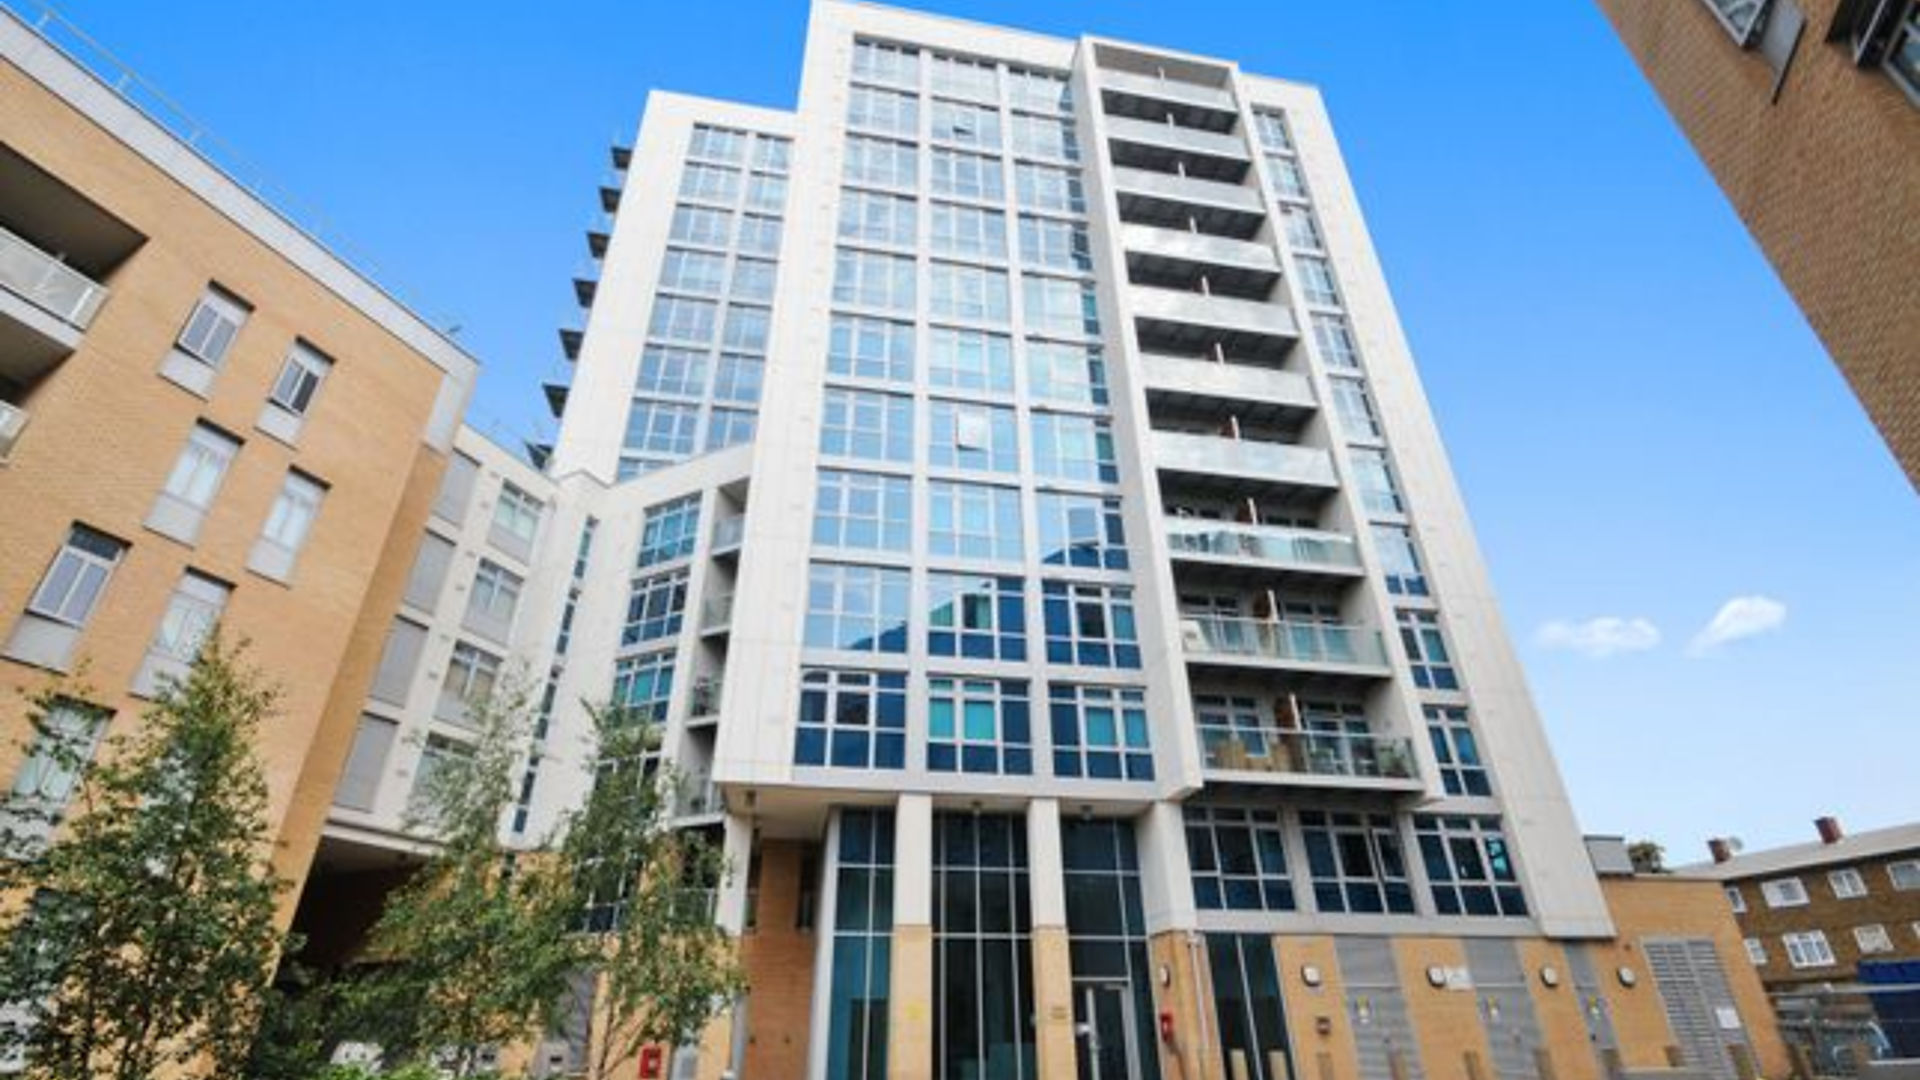 Iona Tower Apartments | New rental property development